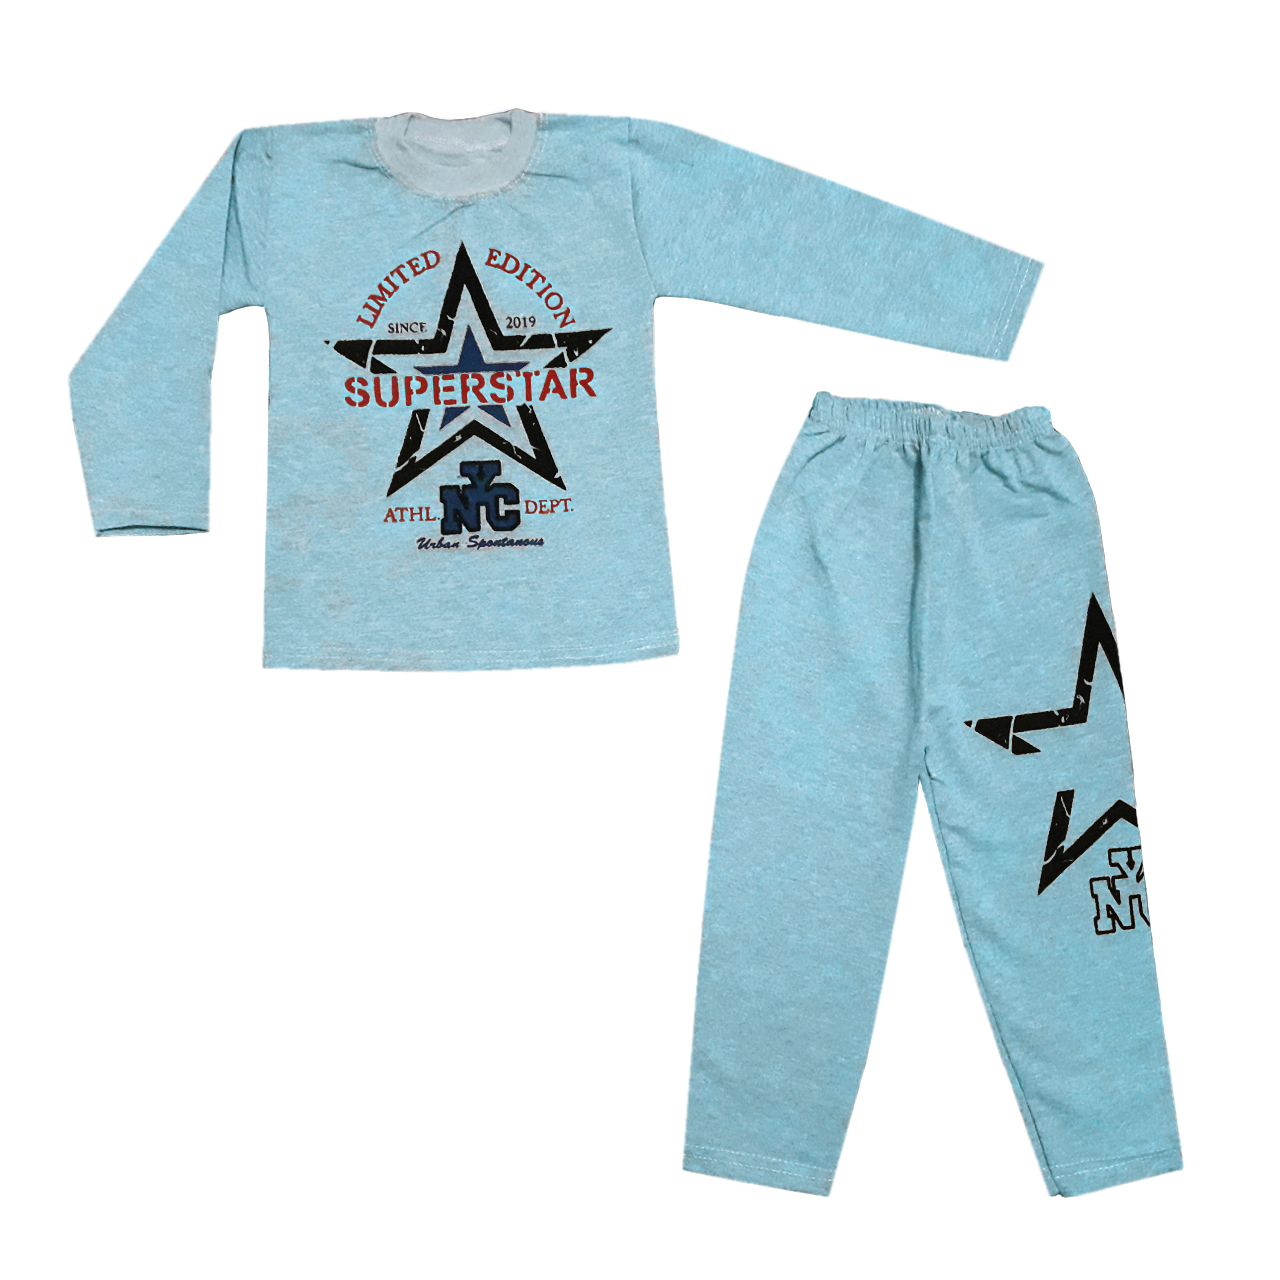 ست تی شرت و شلوار پسرانه طرح SuperStar رنگ آبی